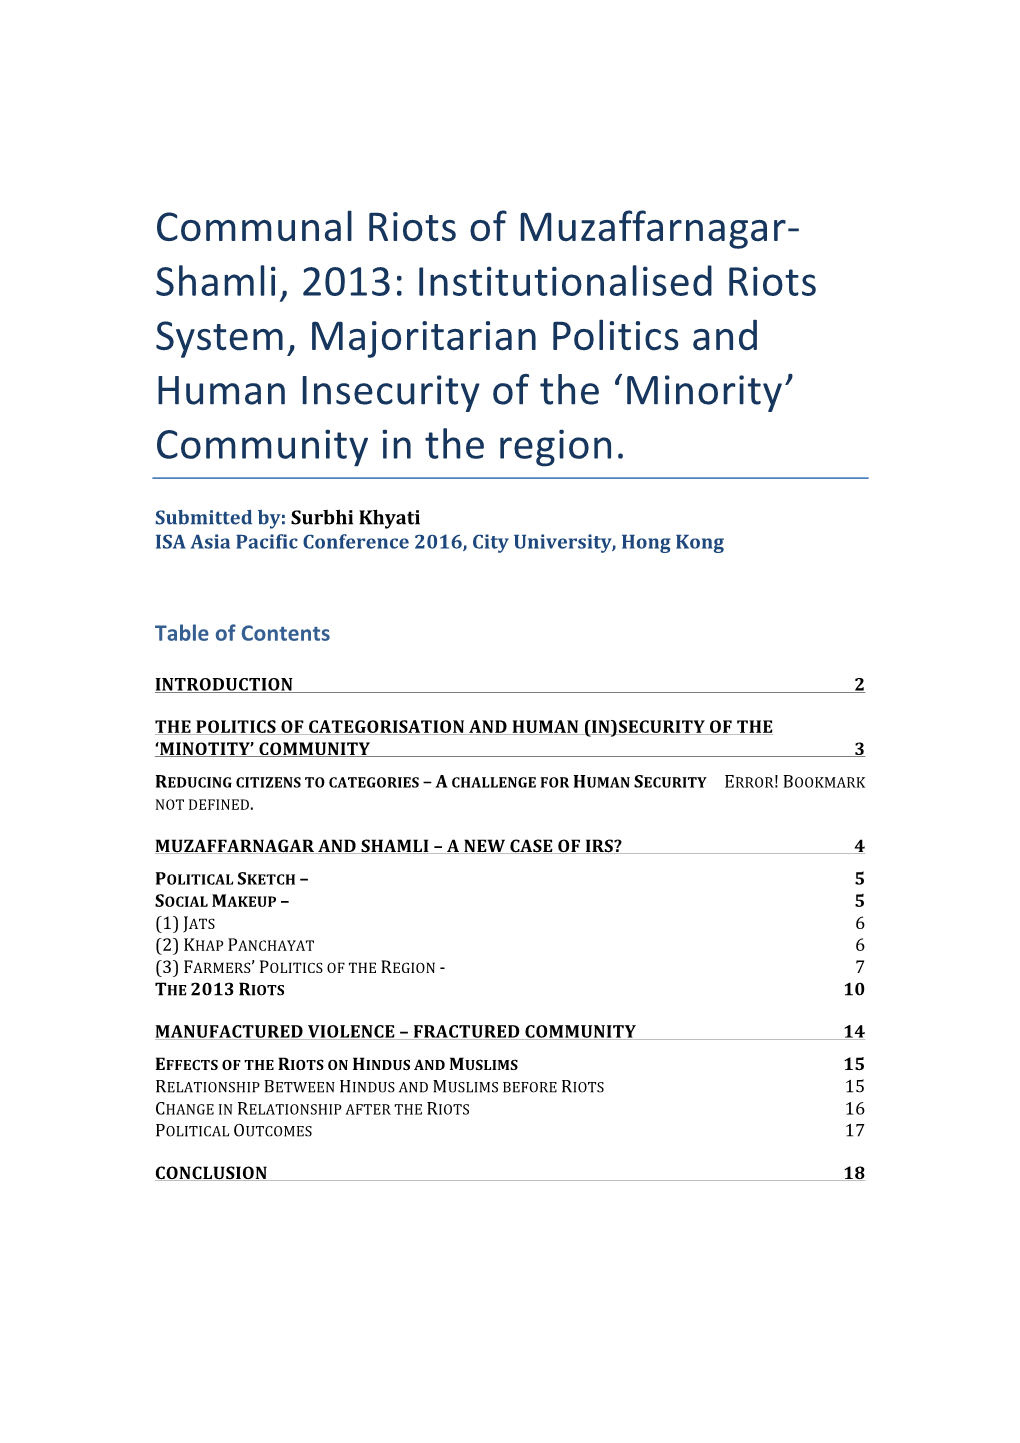 Communal Riots of Muzaffarnagar- Shamli, 2013: Institutionalised Riots System, Majoritarian Politics and Human Insecurity of the ‘Minority’ Community in the Region